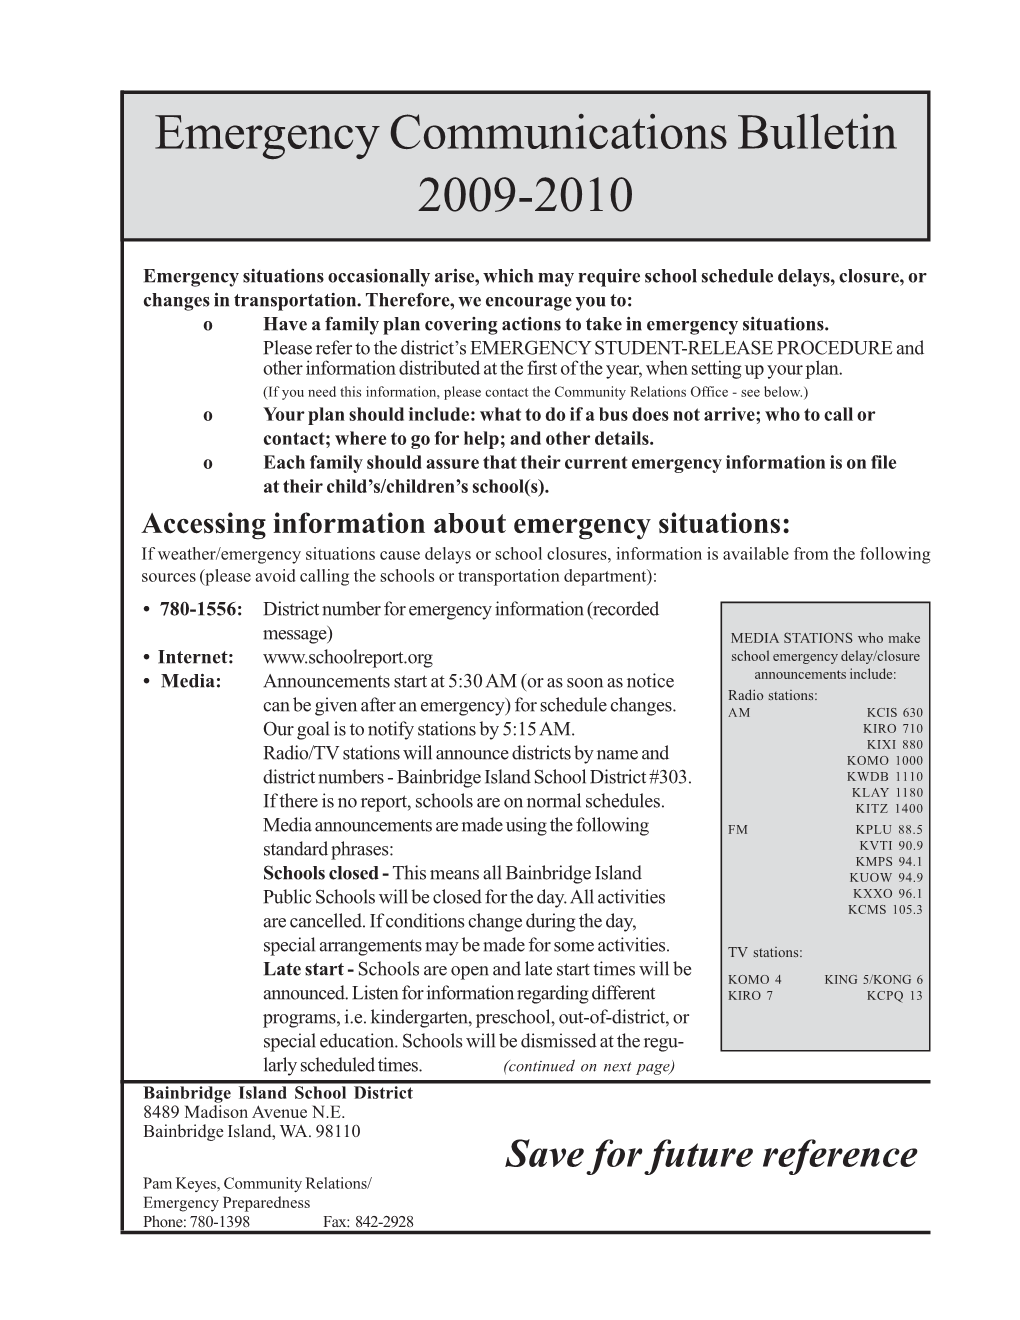 Emergency Communications Bulletin 2009-10.Pmd